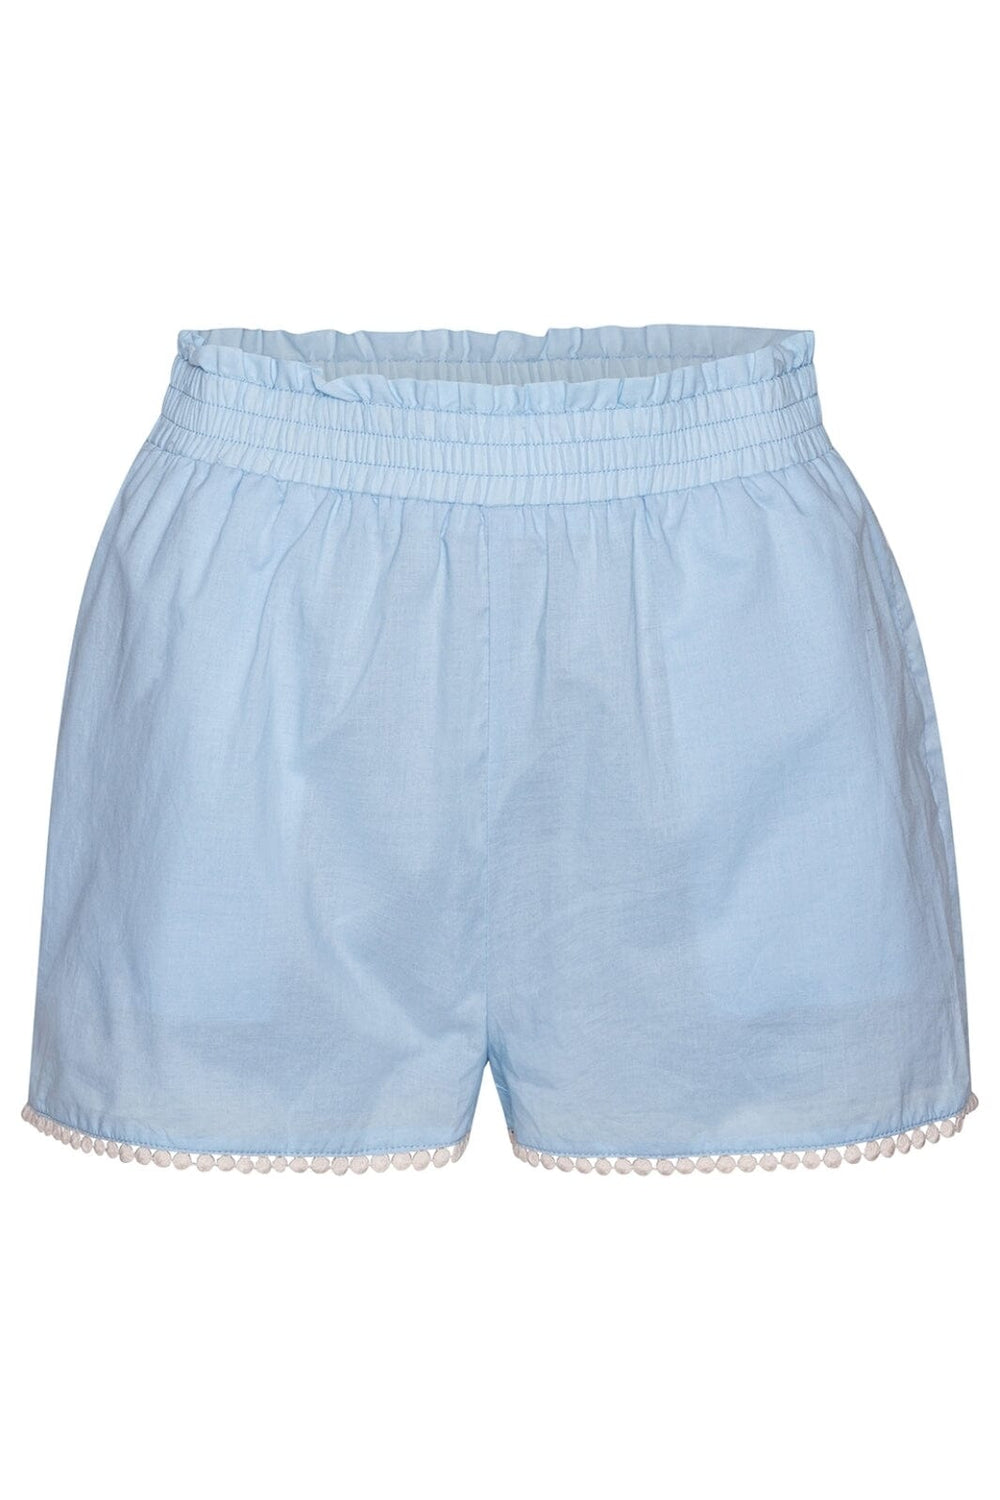 Continue - Ea Shorts - Light Blue Shorts 